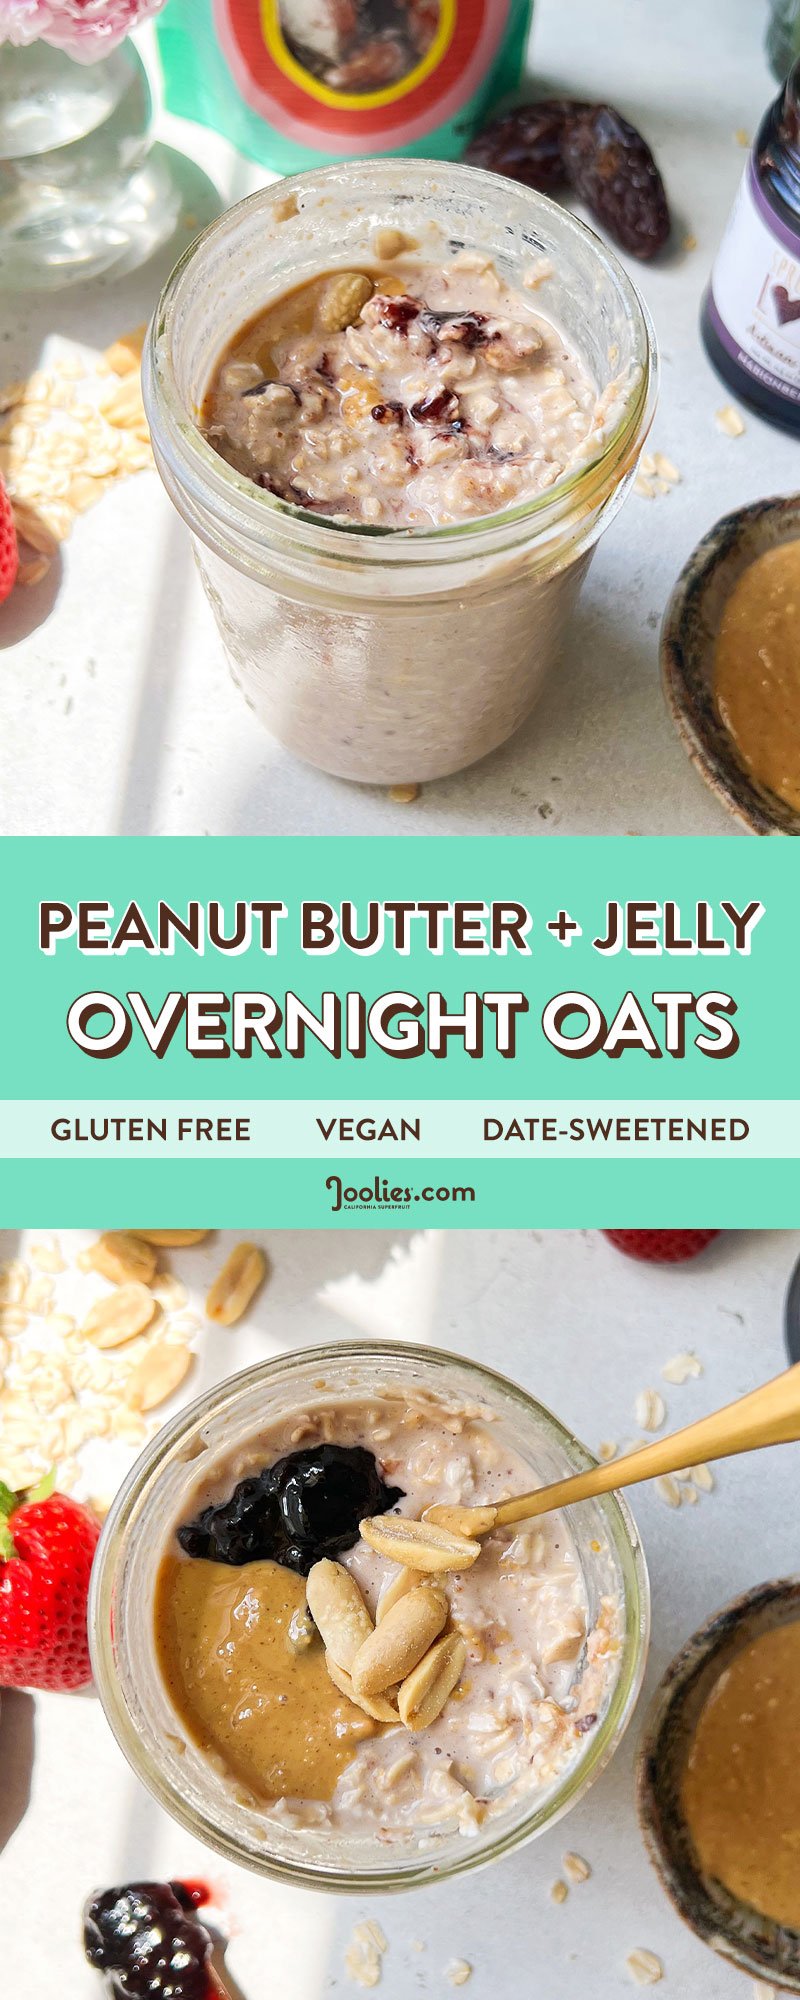 Peanut Butter + Jelly Overnight Oats